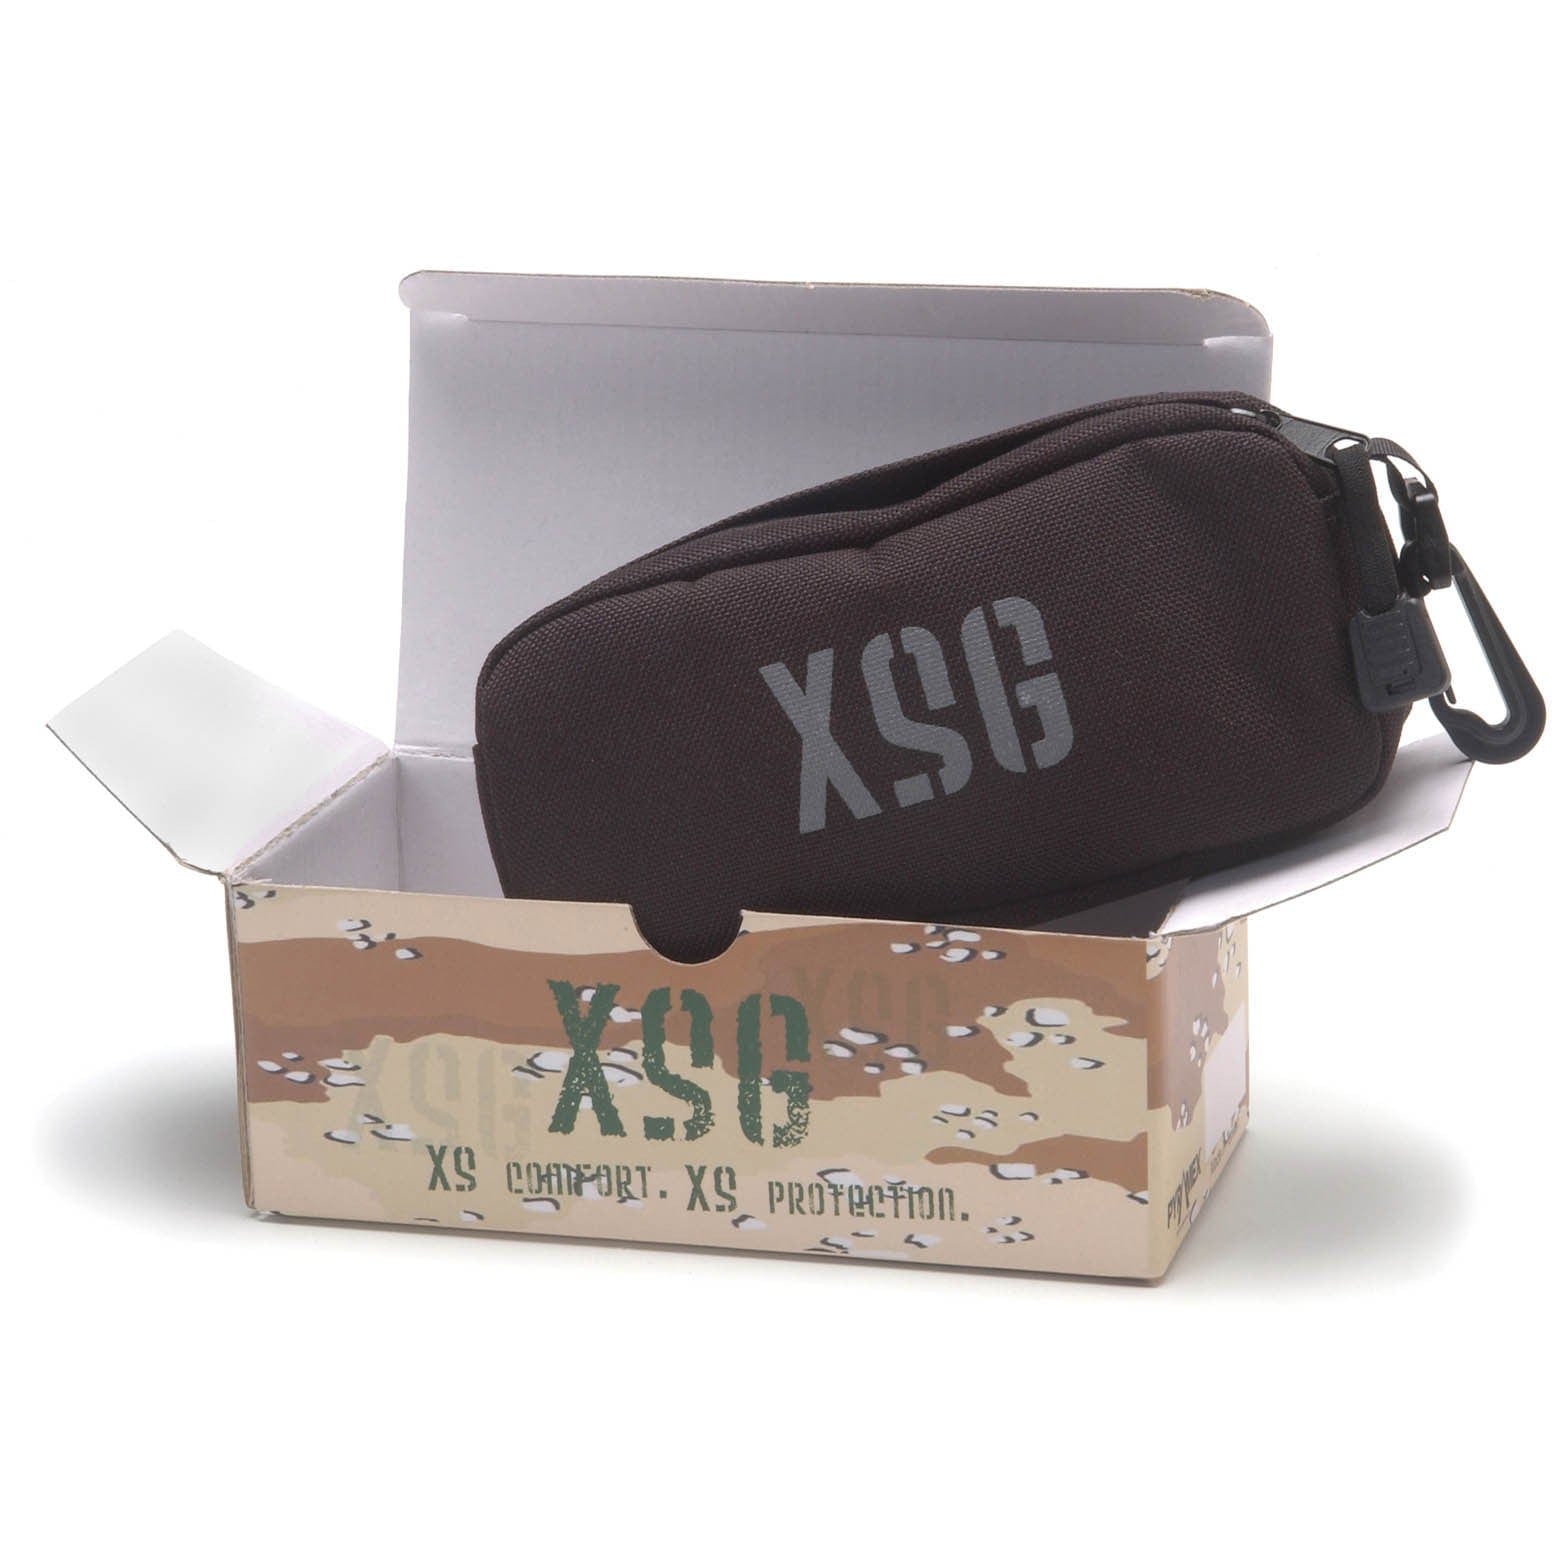 Pyramex XSG Ballistic Goggle Kit Black Frame Clear, Gray, Amber Lenses Box and Case